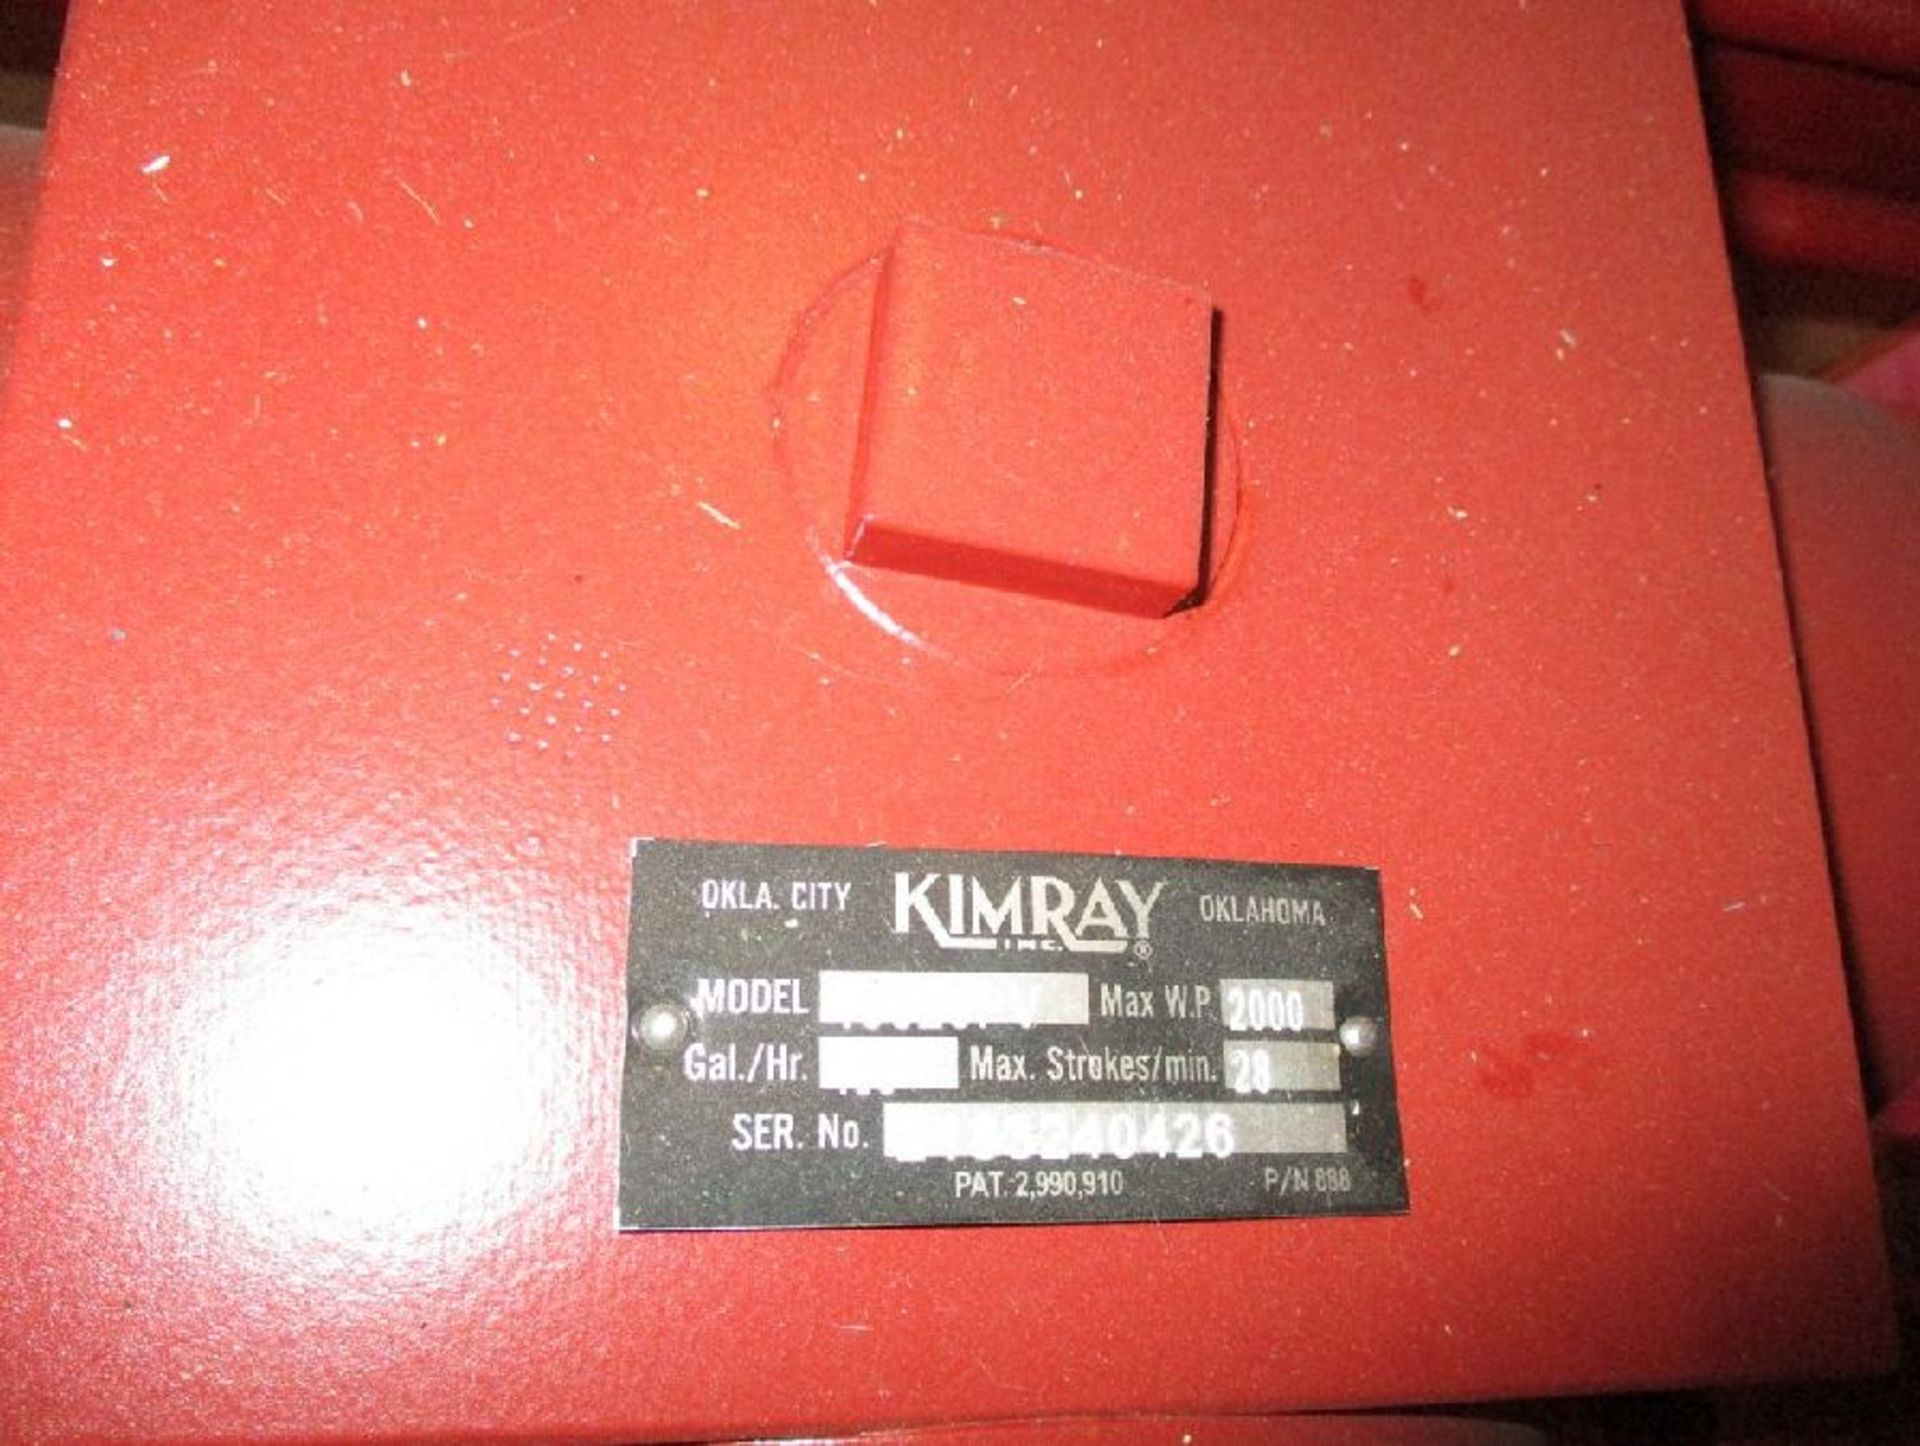 Model Kimray #GAJHSN 45020PV Unused Glycol Pumps - Image 4 of 6